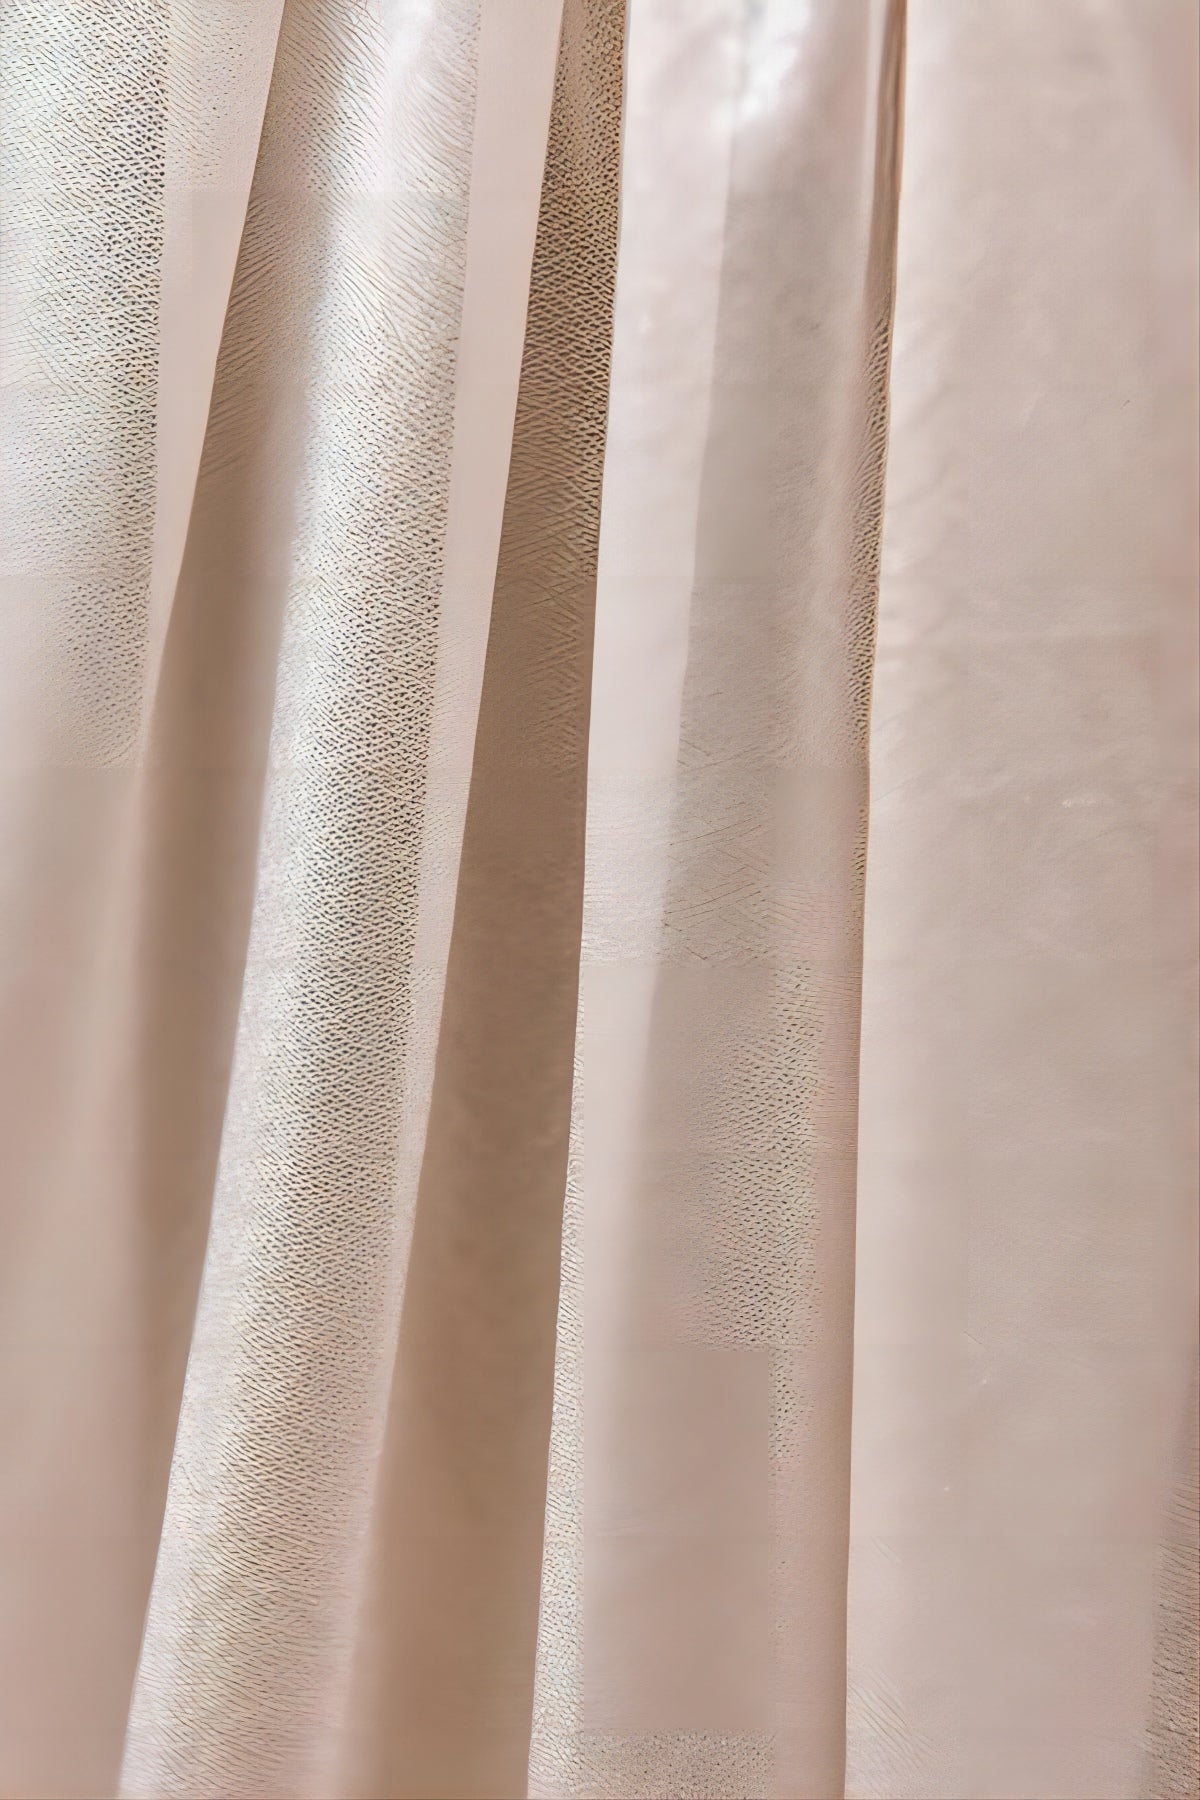 Table Linens in Blush & Cream